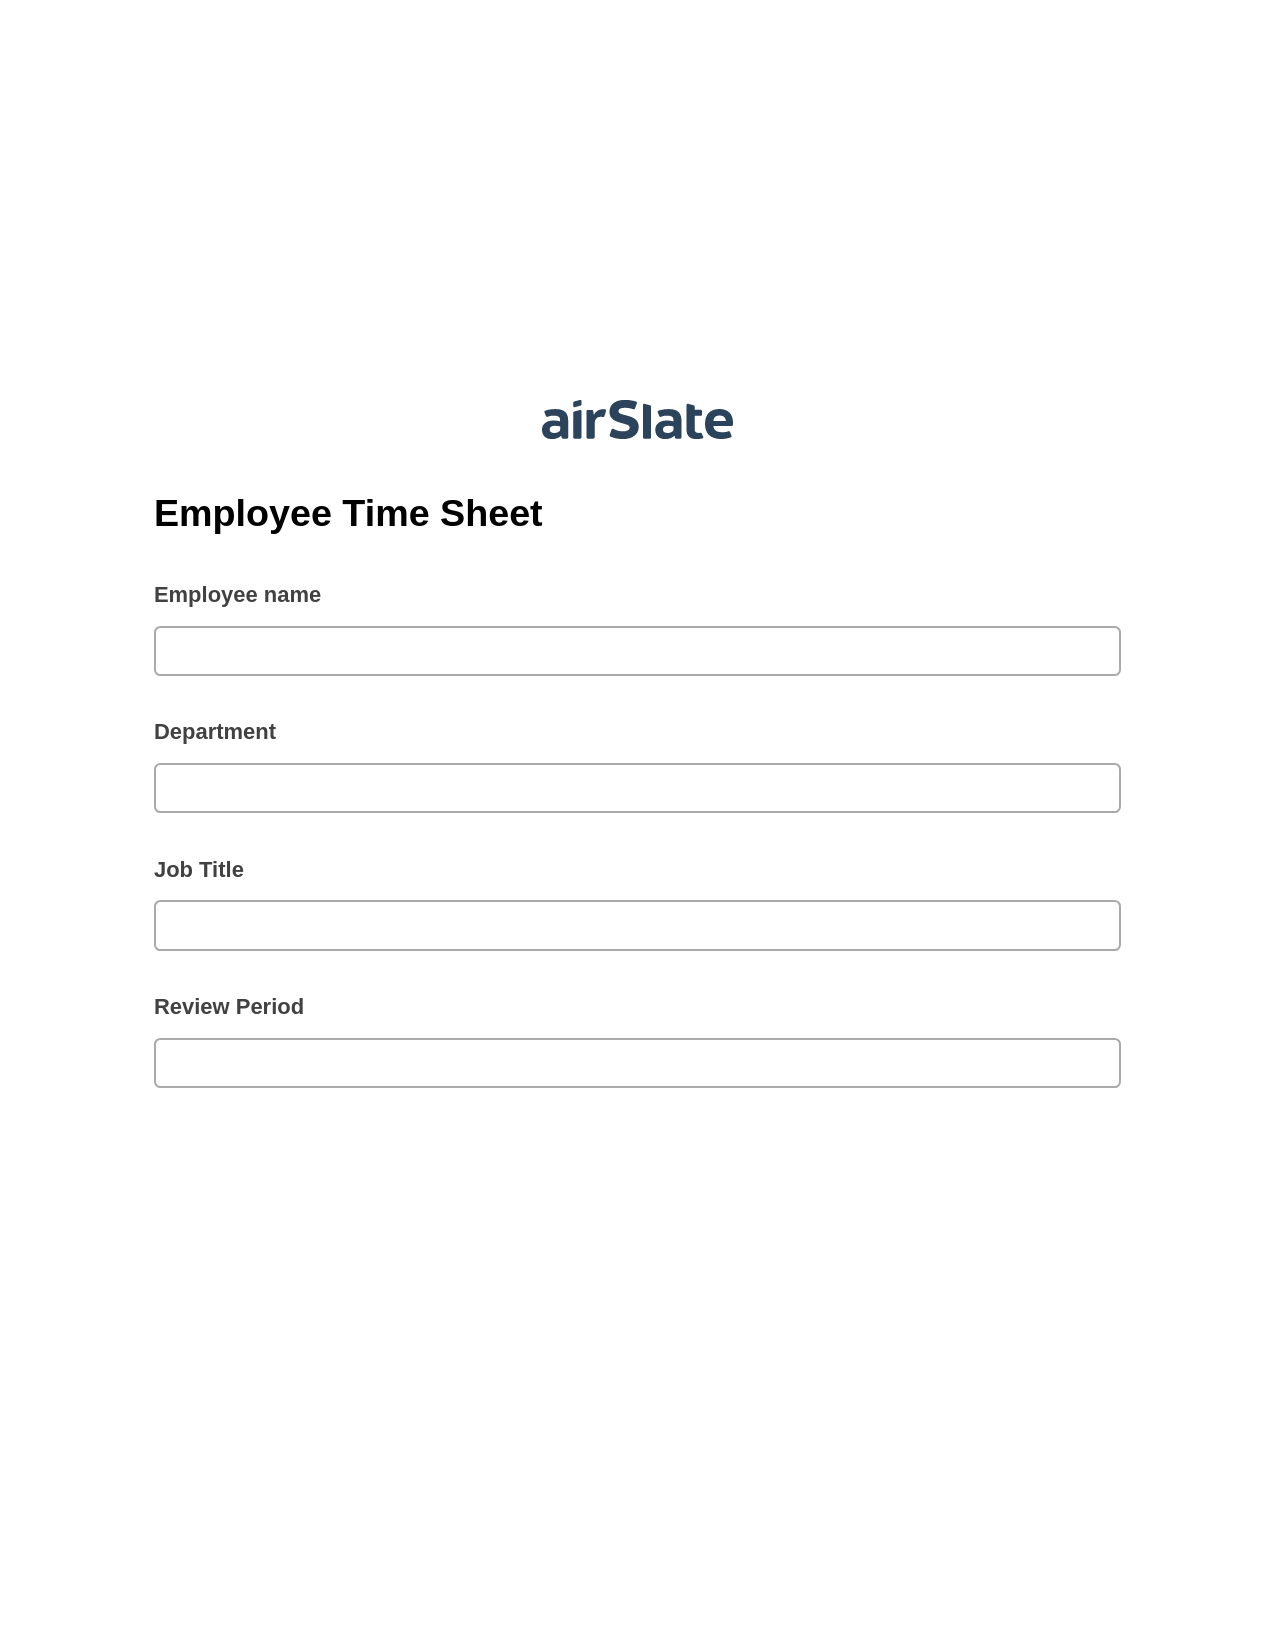 Multirole Employee Time Sheet Pre-fill Dropdowns from MySQL Bot, Create slate addon, Archive to Google Drive Bot